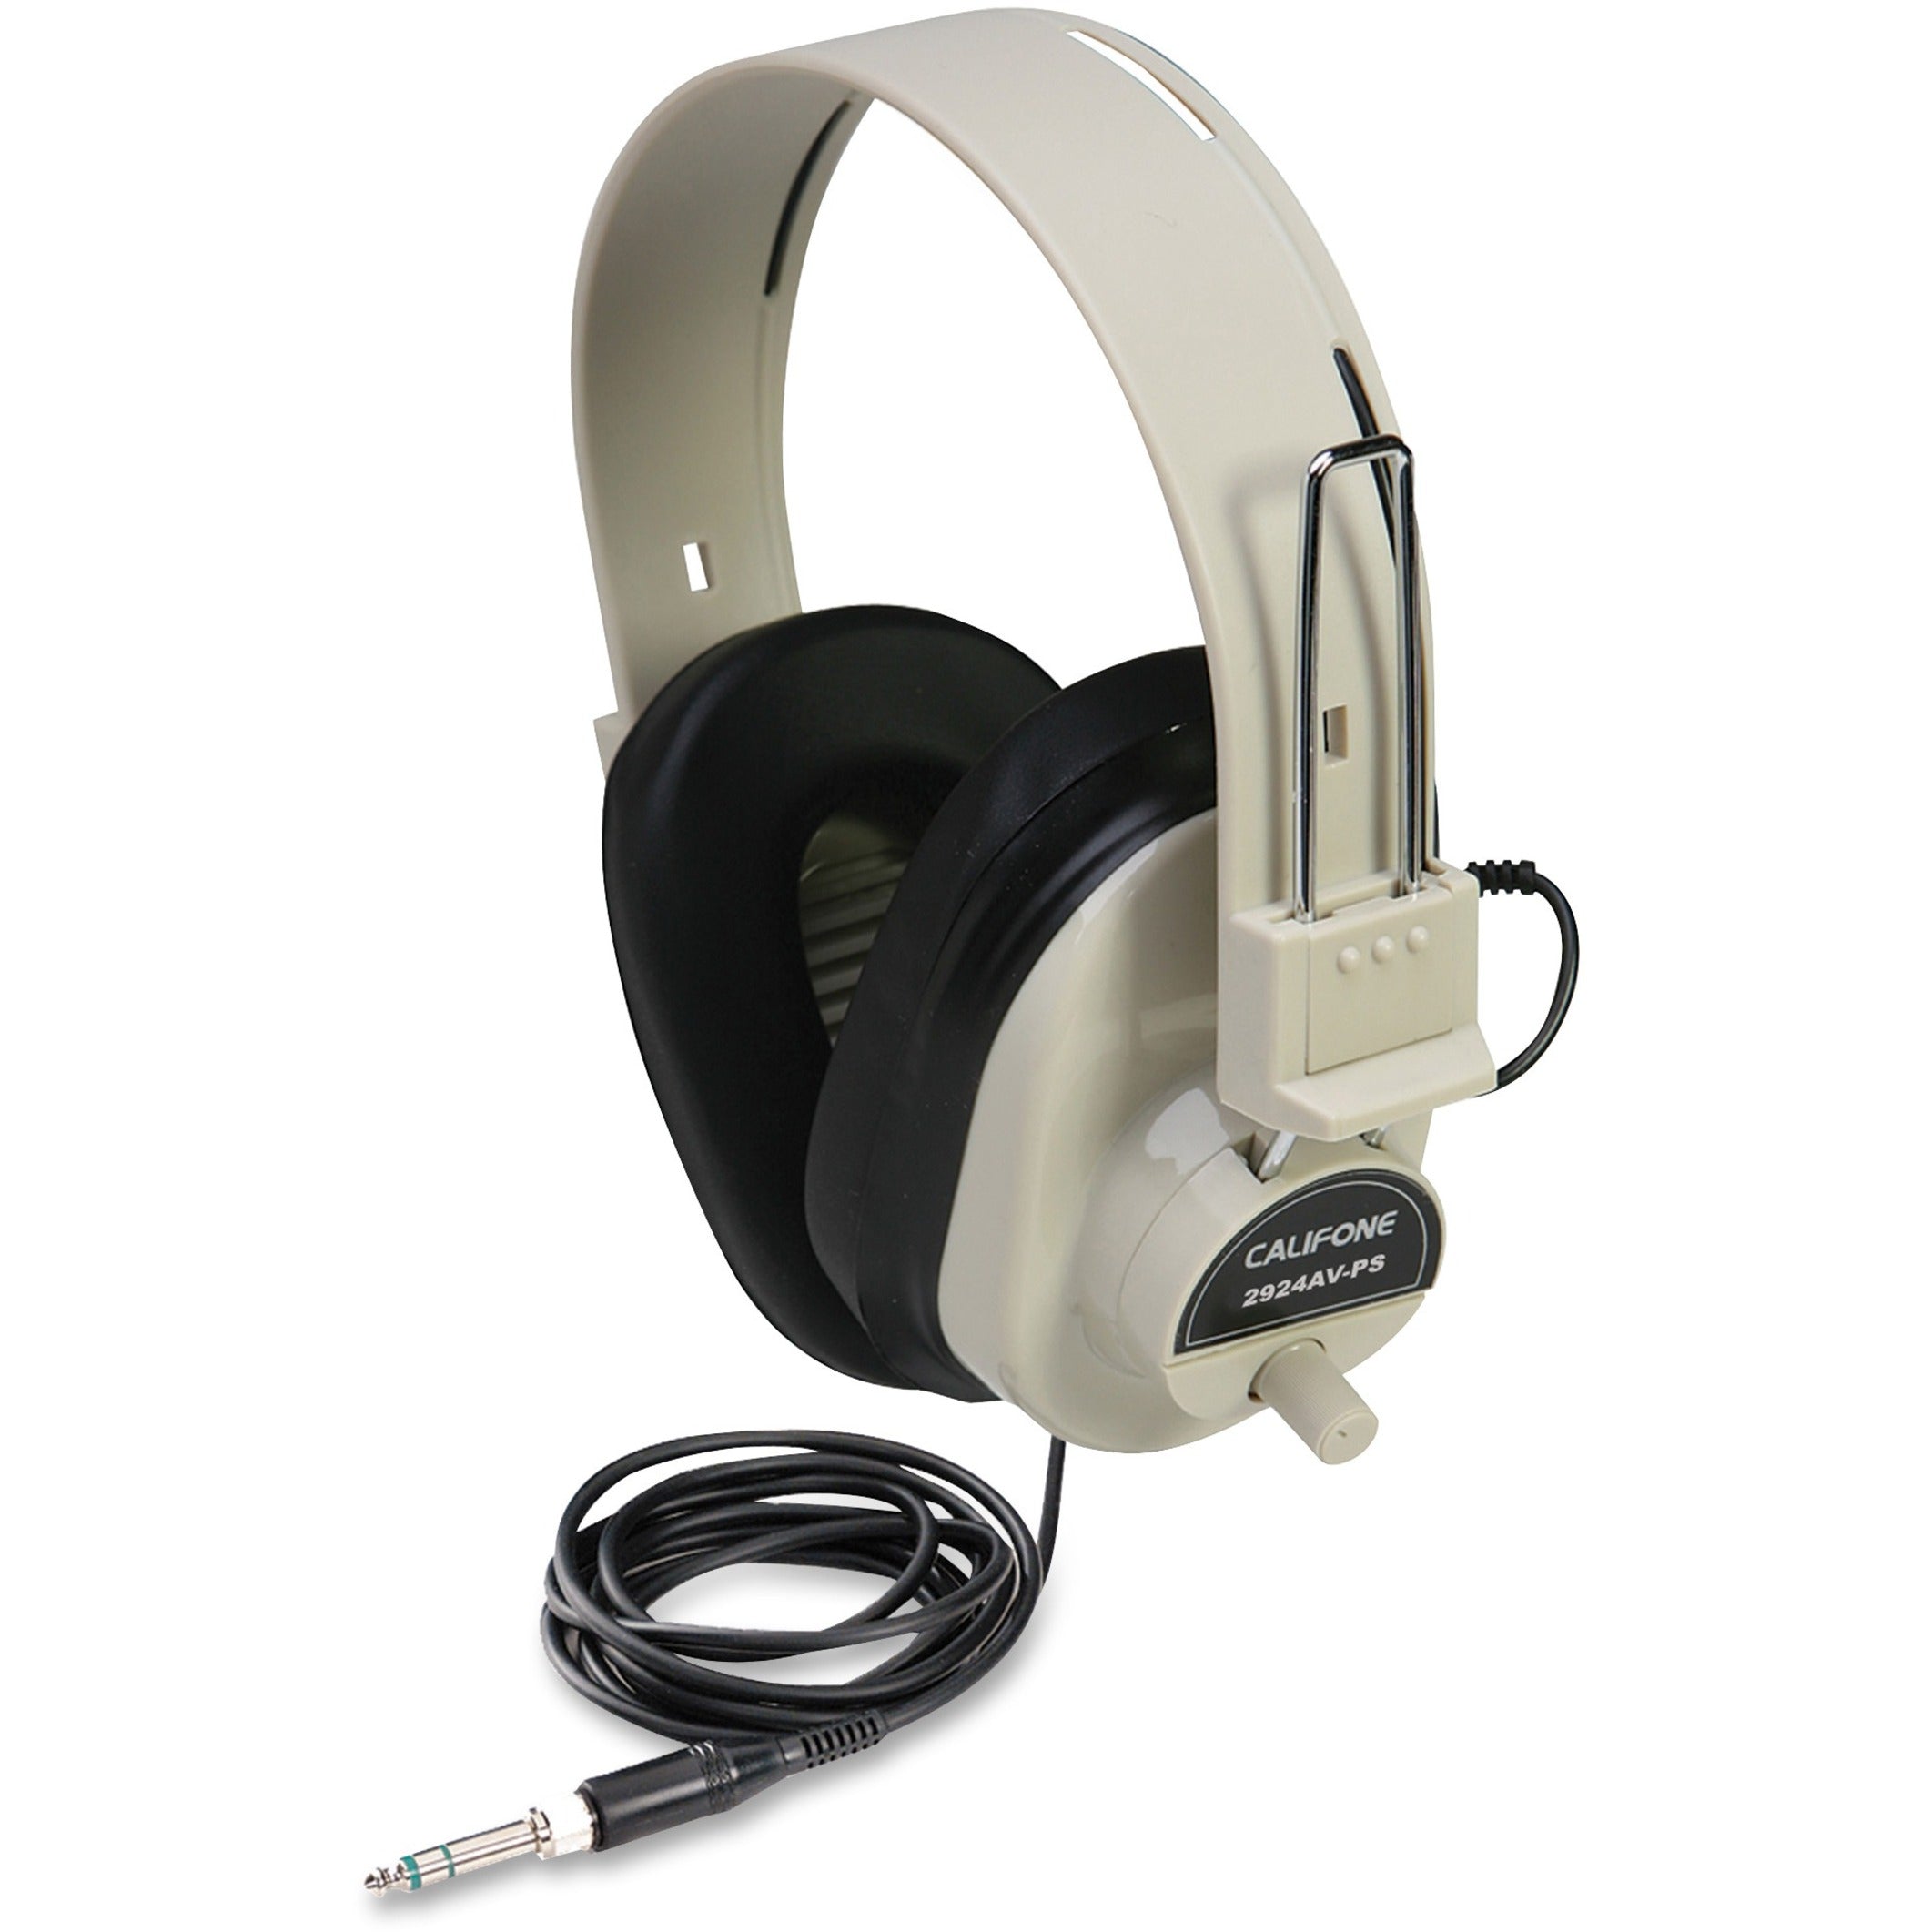 Califone 2924AVPS Deluxe Headphone, Over-the-head, Volume Control, 2 Year Warranty